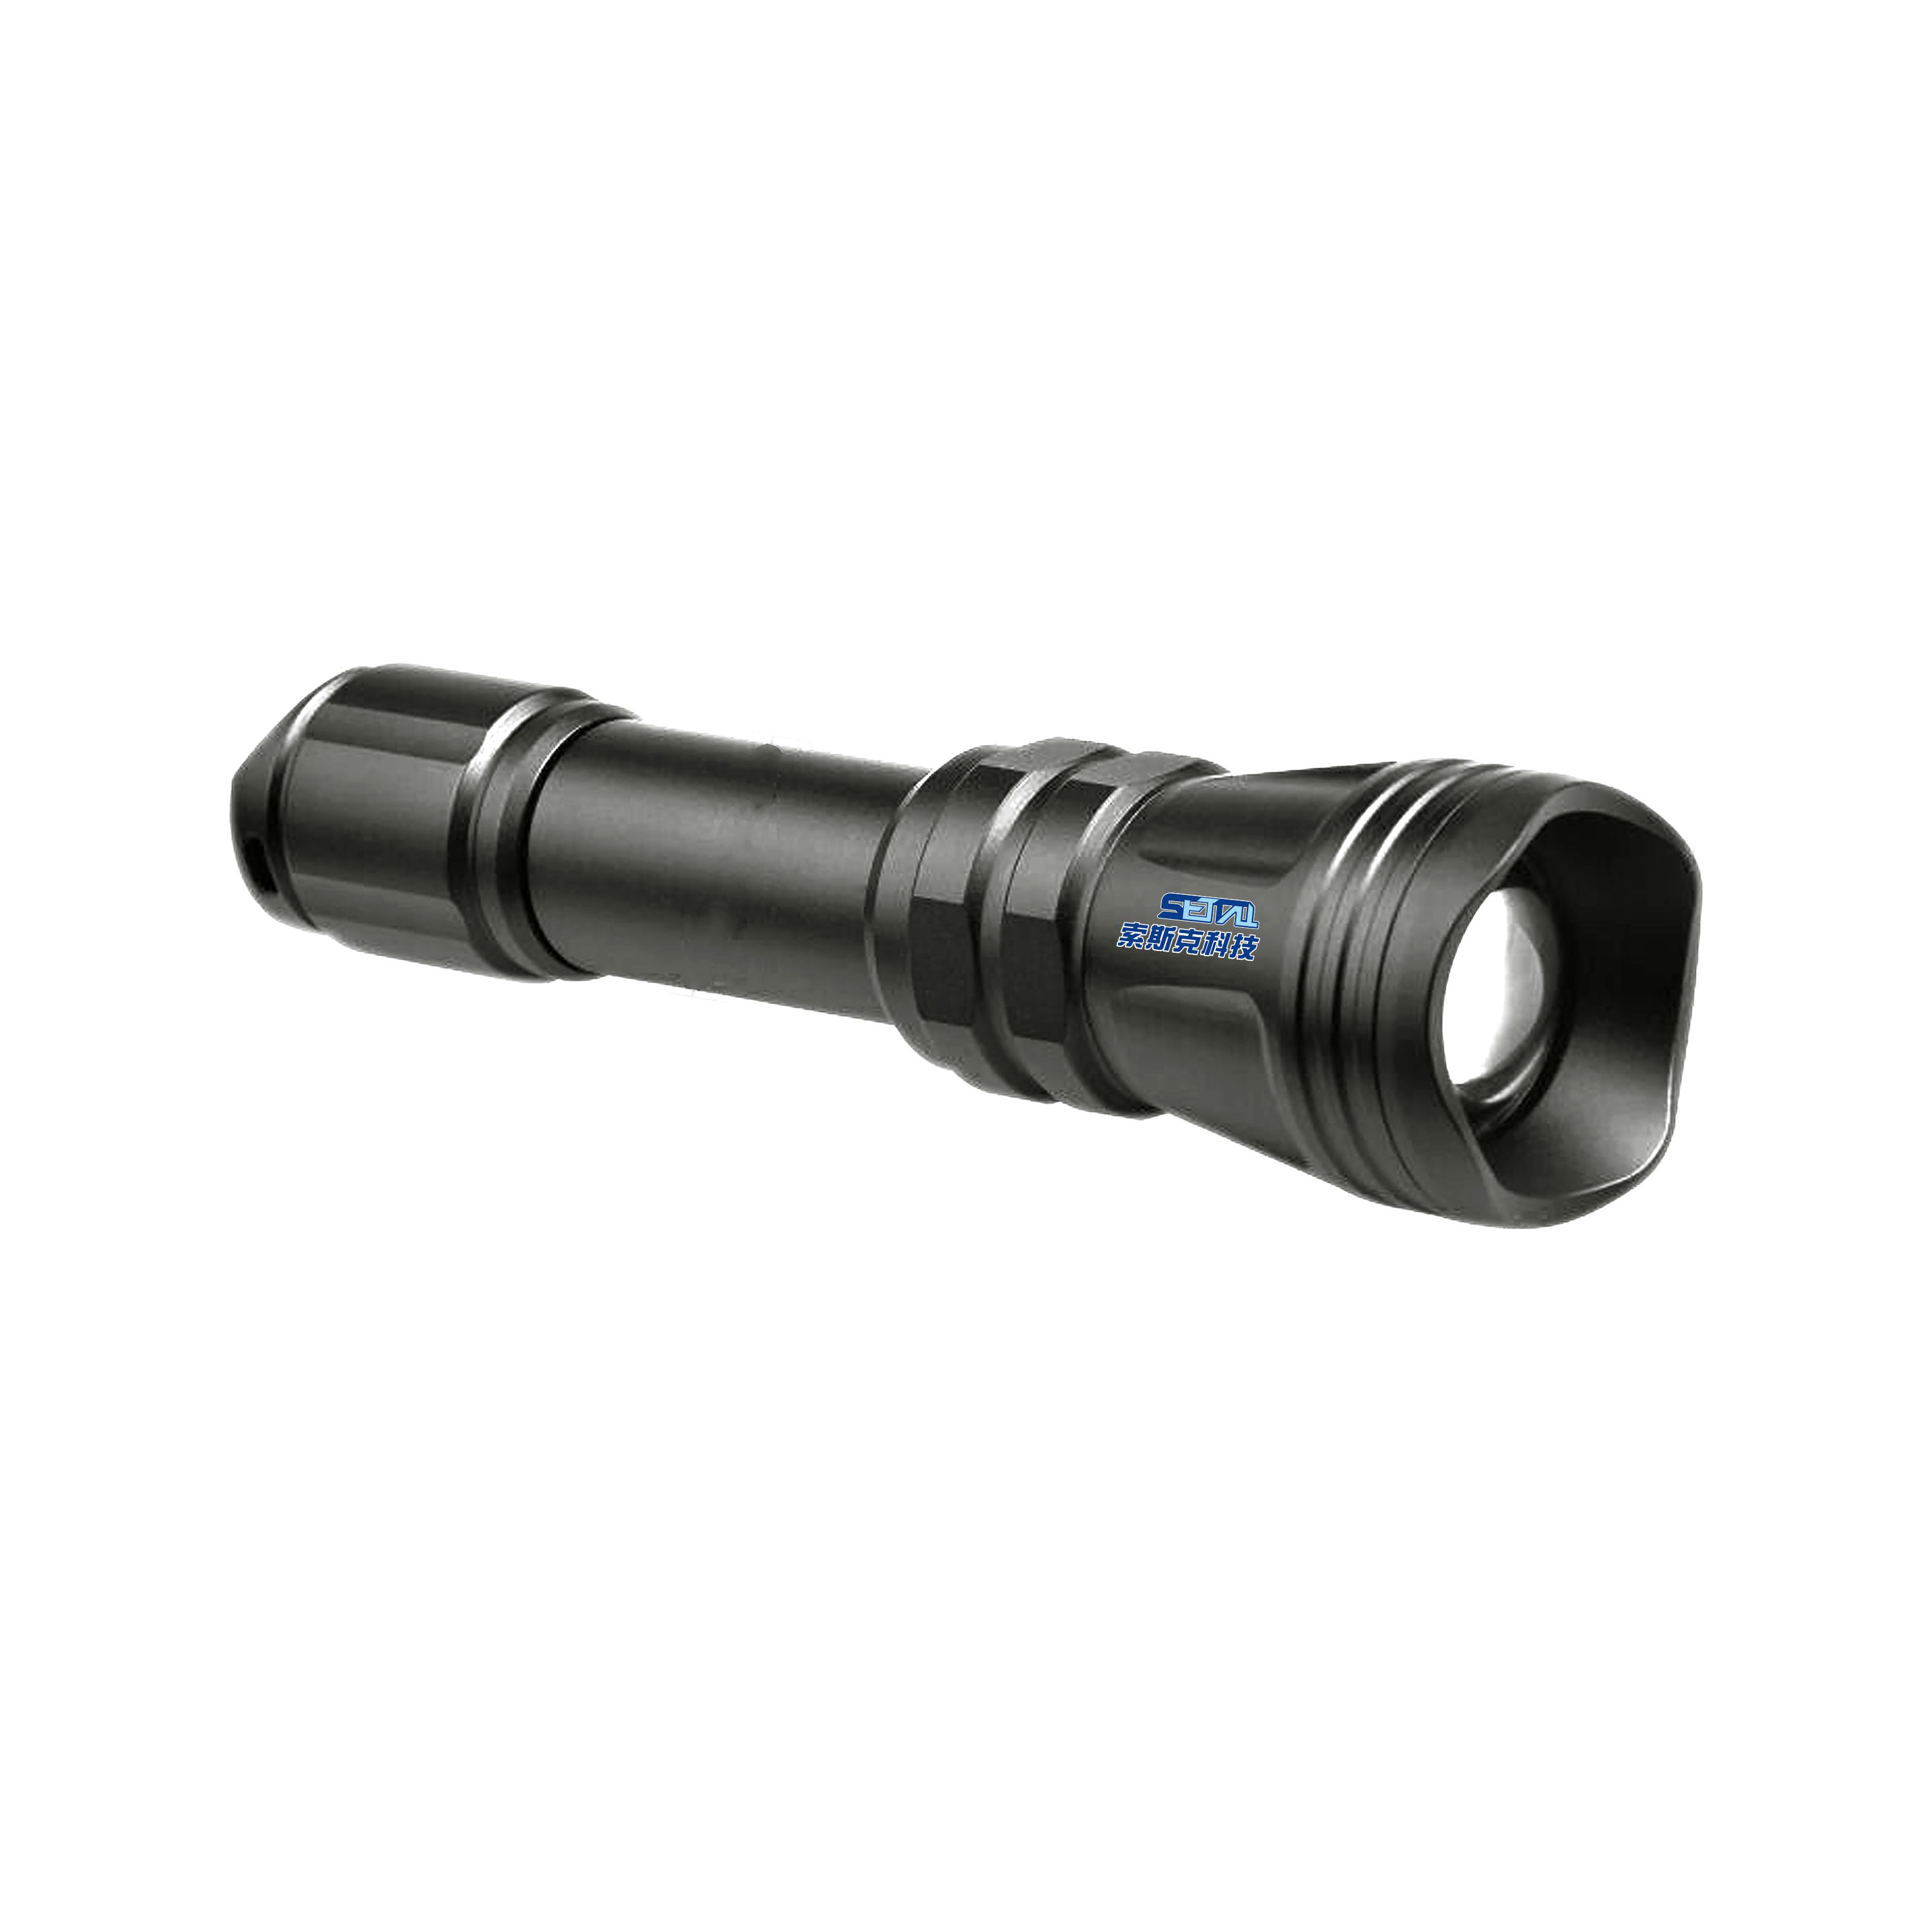 SETTALL Laser flashlight Featured Image